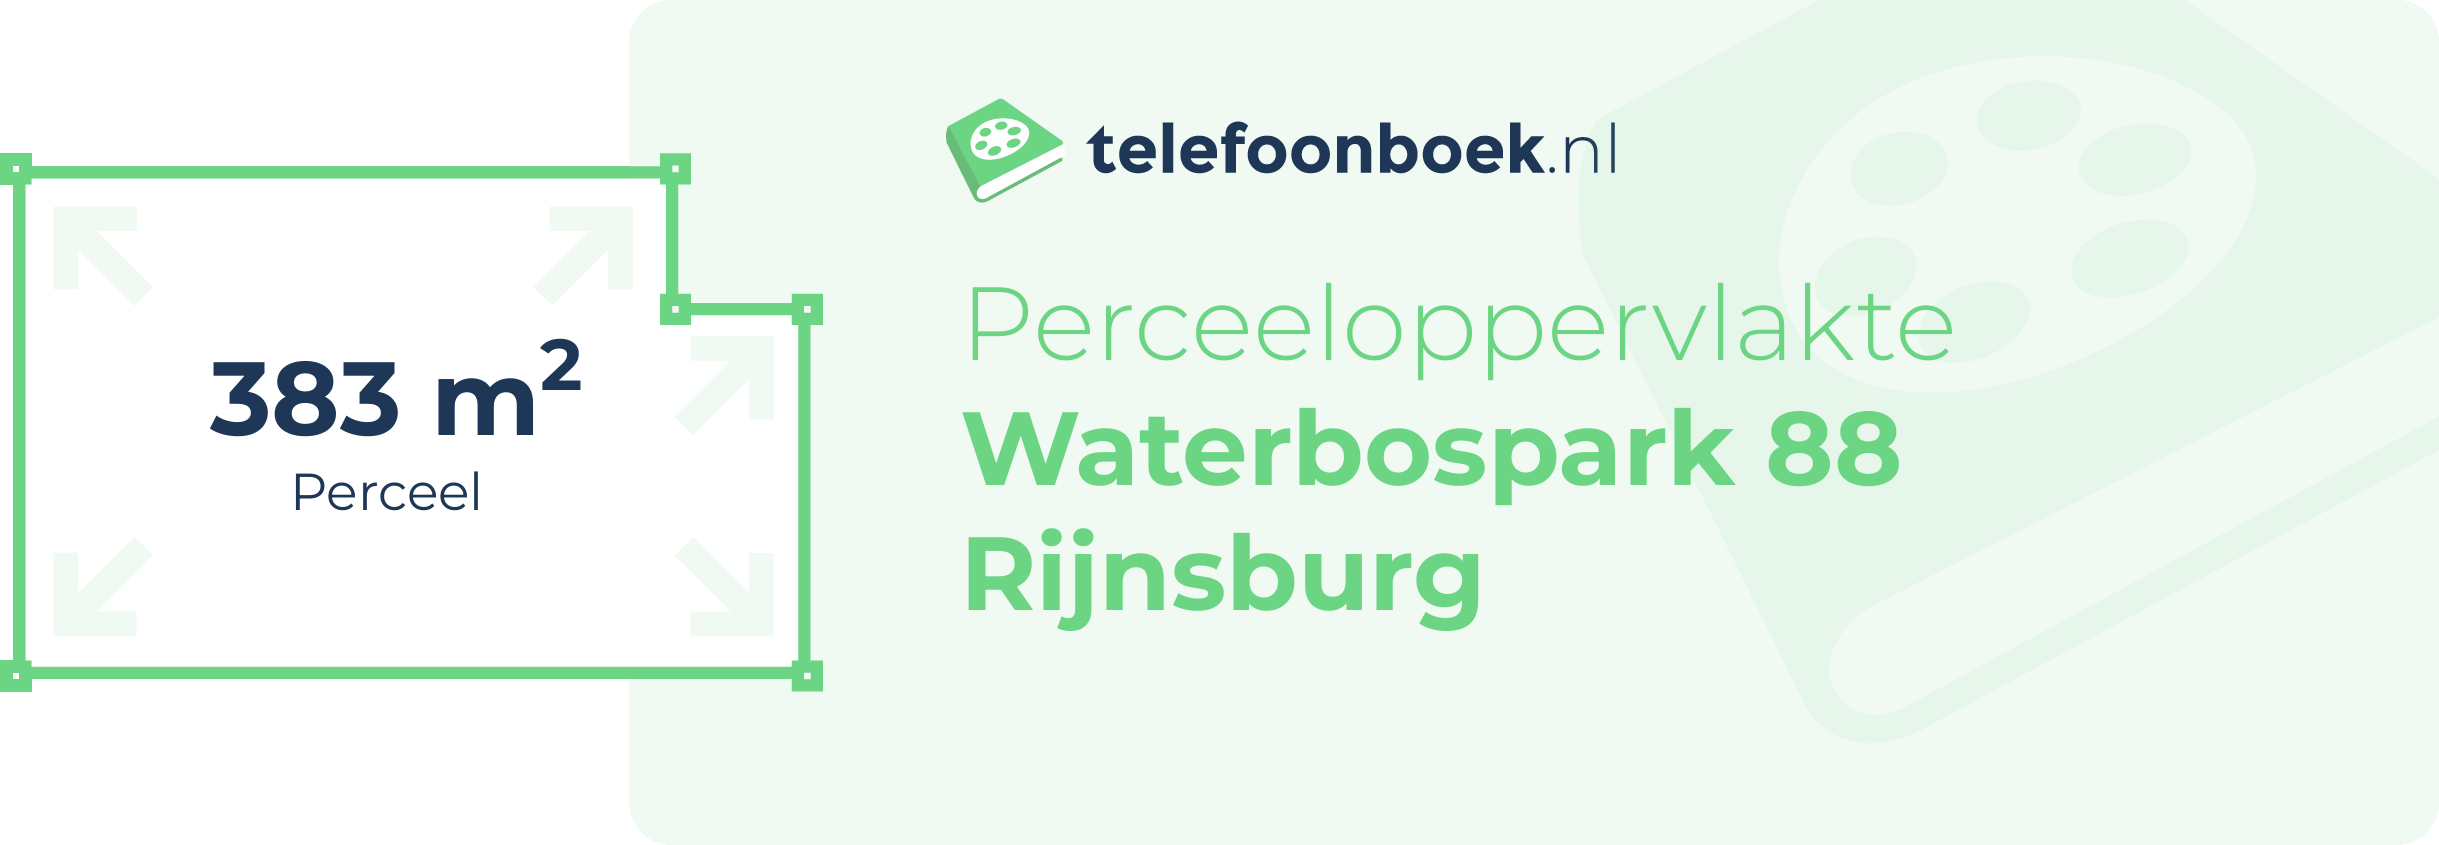 Perceeloppervlakte Waterbospark 88 Rijnsburg